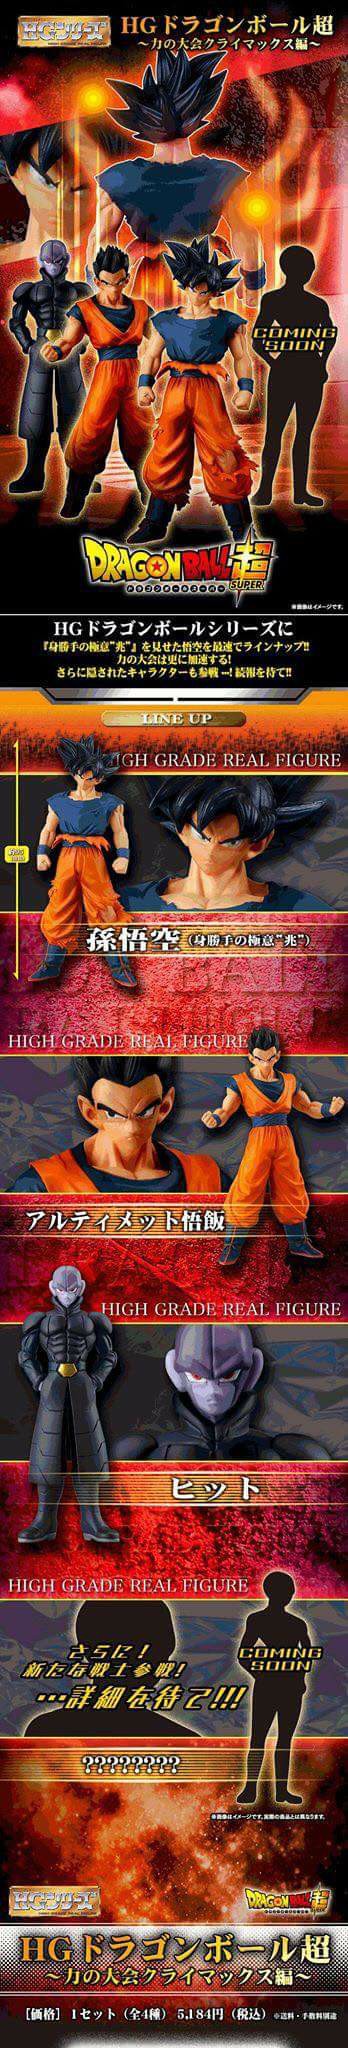 Dragon Ball Z : HG (High Grade Real Figure) Rsof